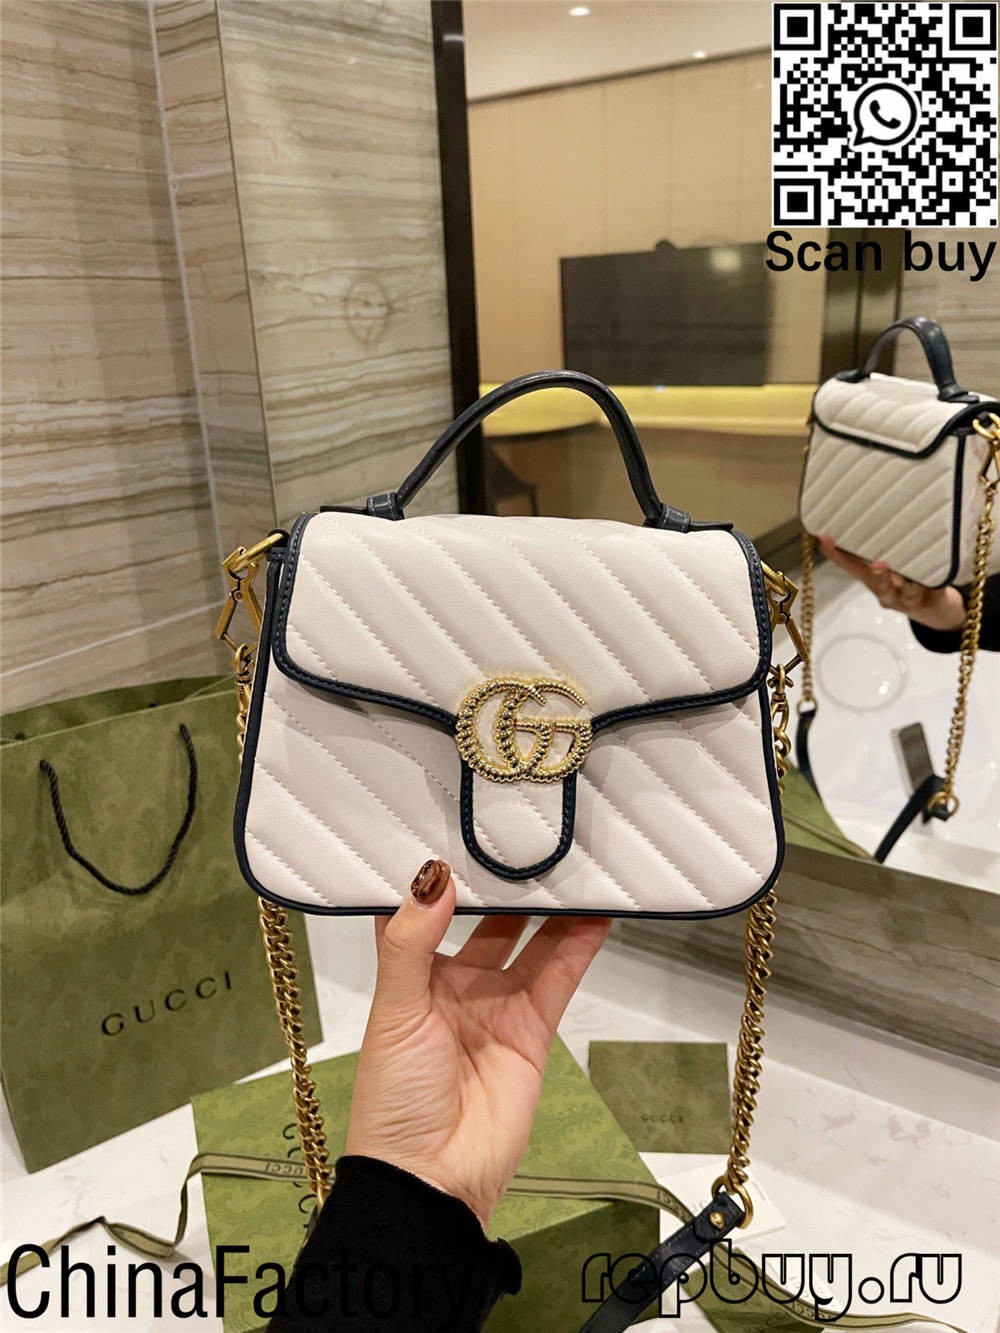 Gucci’s top 12 best replica bags to buy (2022 updated)-Best Quality Fake designer Bag Review, Replica designer bag ru